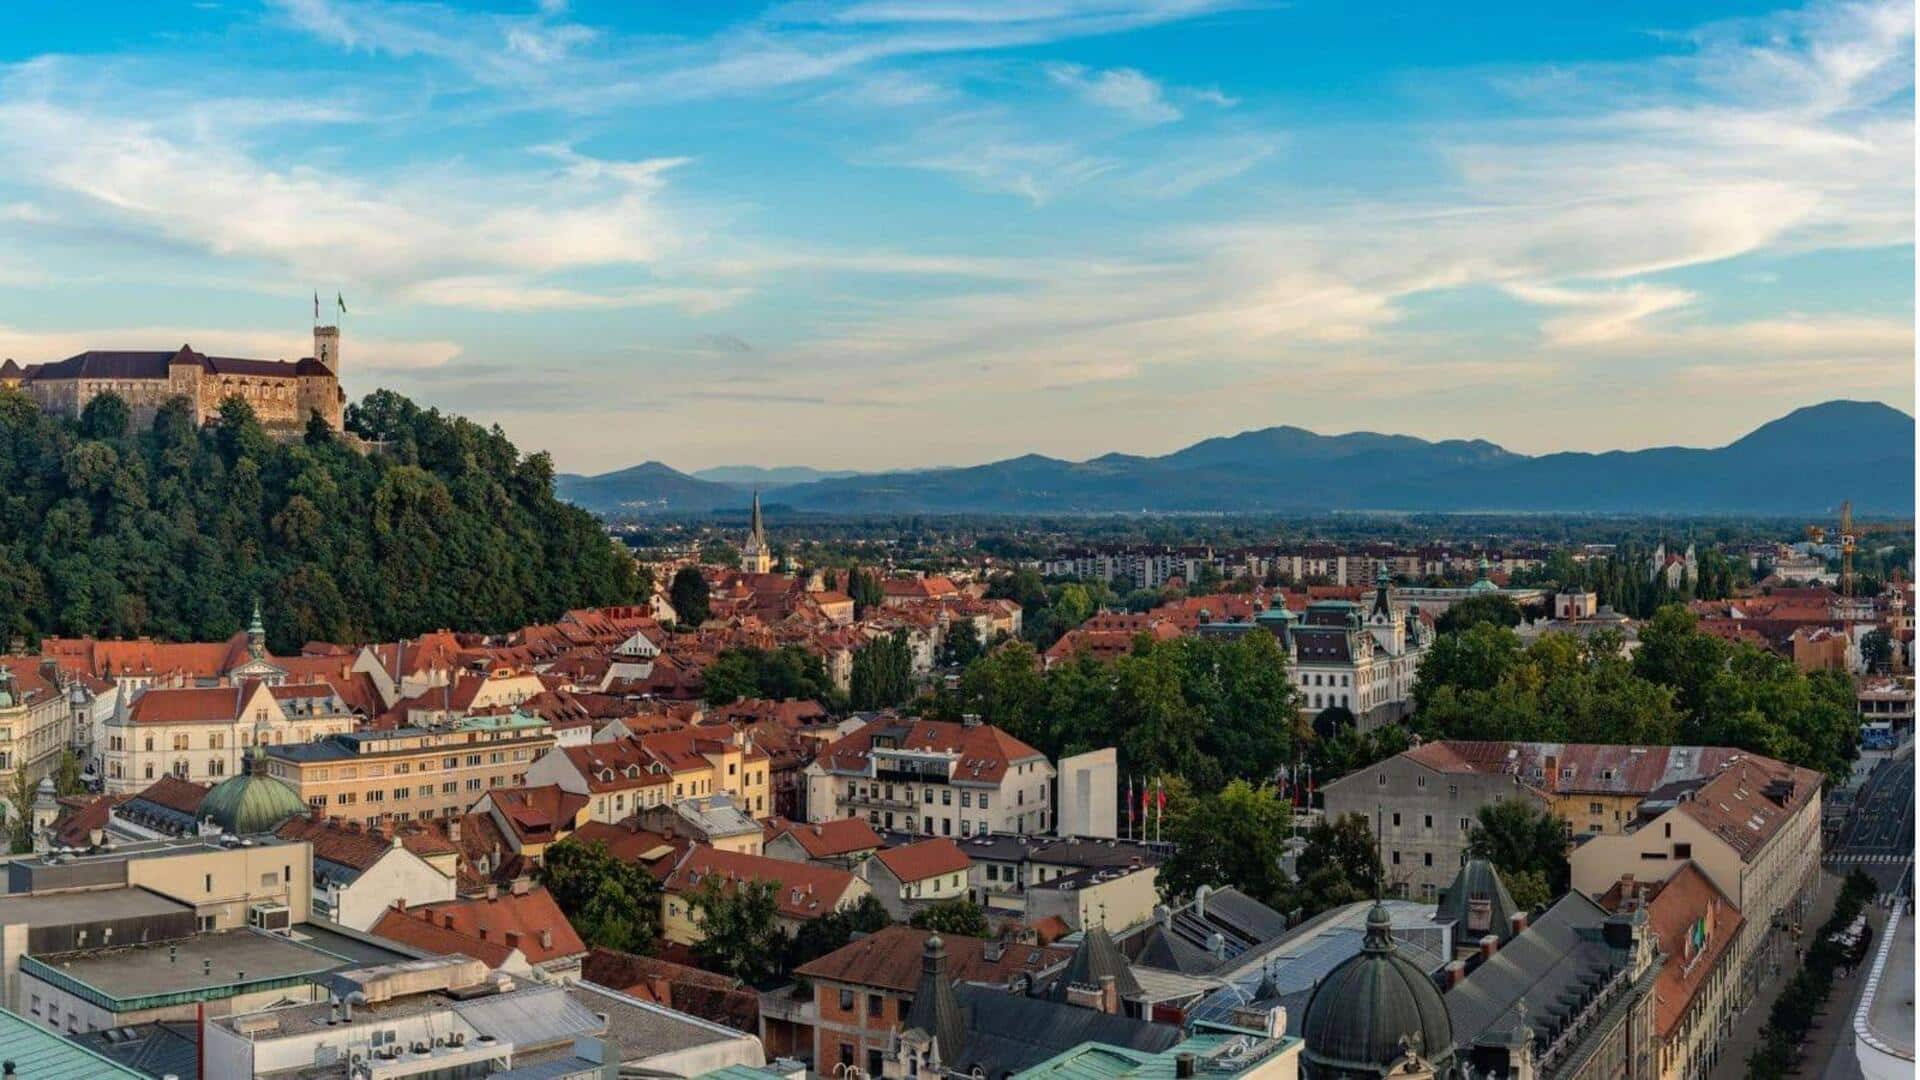 Kunjungi Ljubljana, legenda naga Slovenia